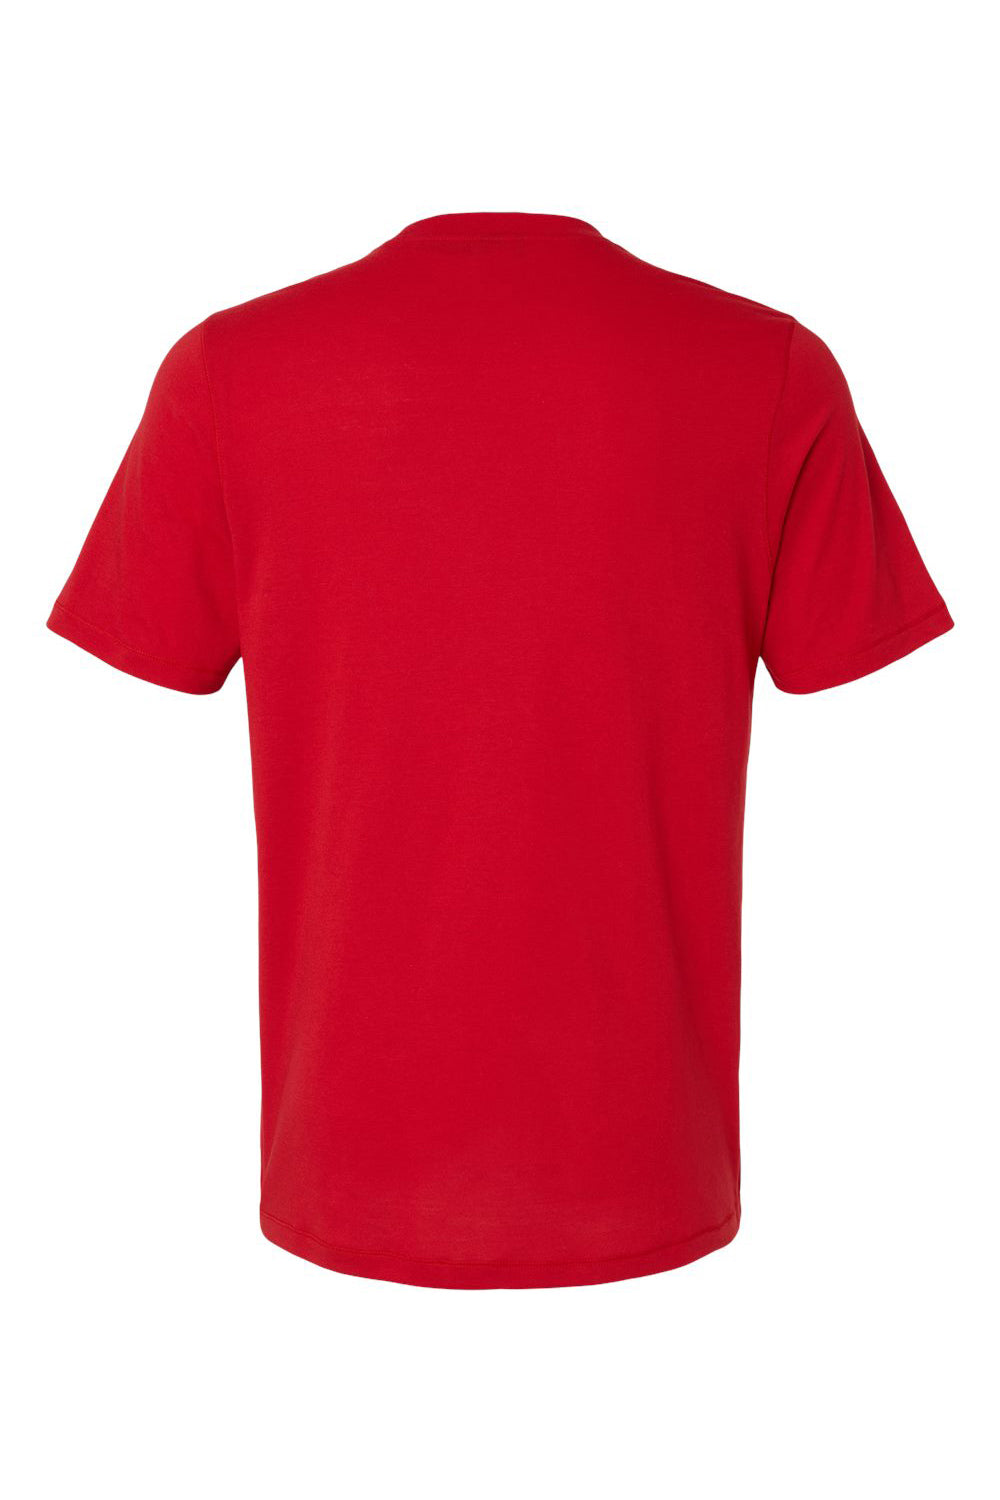 Adidas A556 Mens Short Sleeve Crewneck T-Shirt Power Red Flat Back